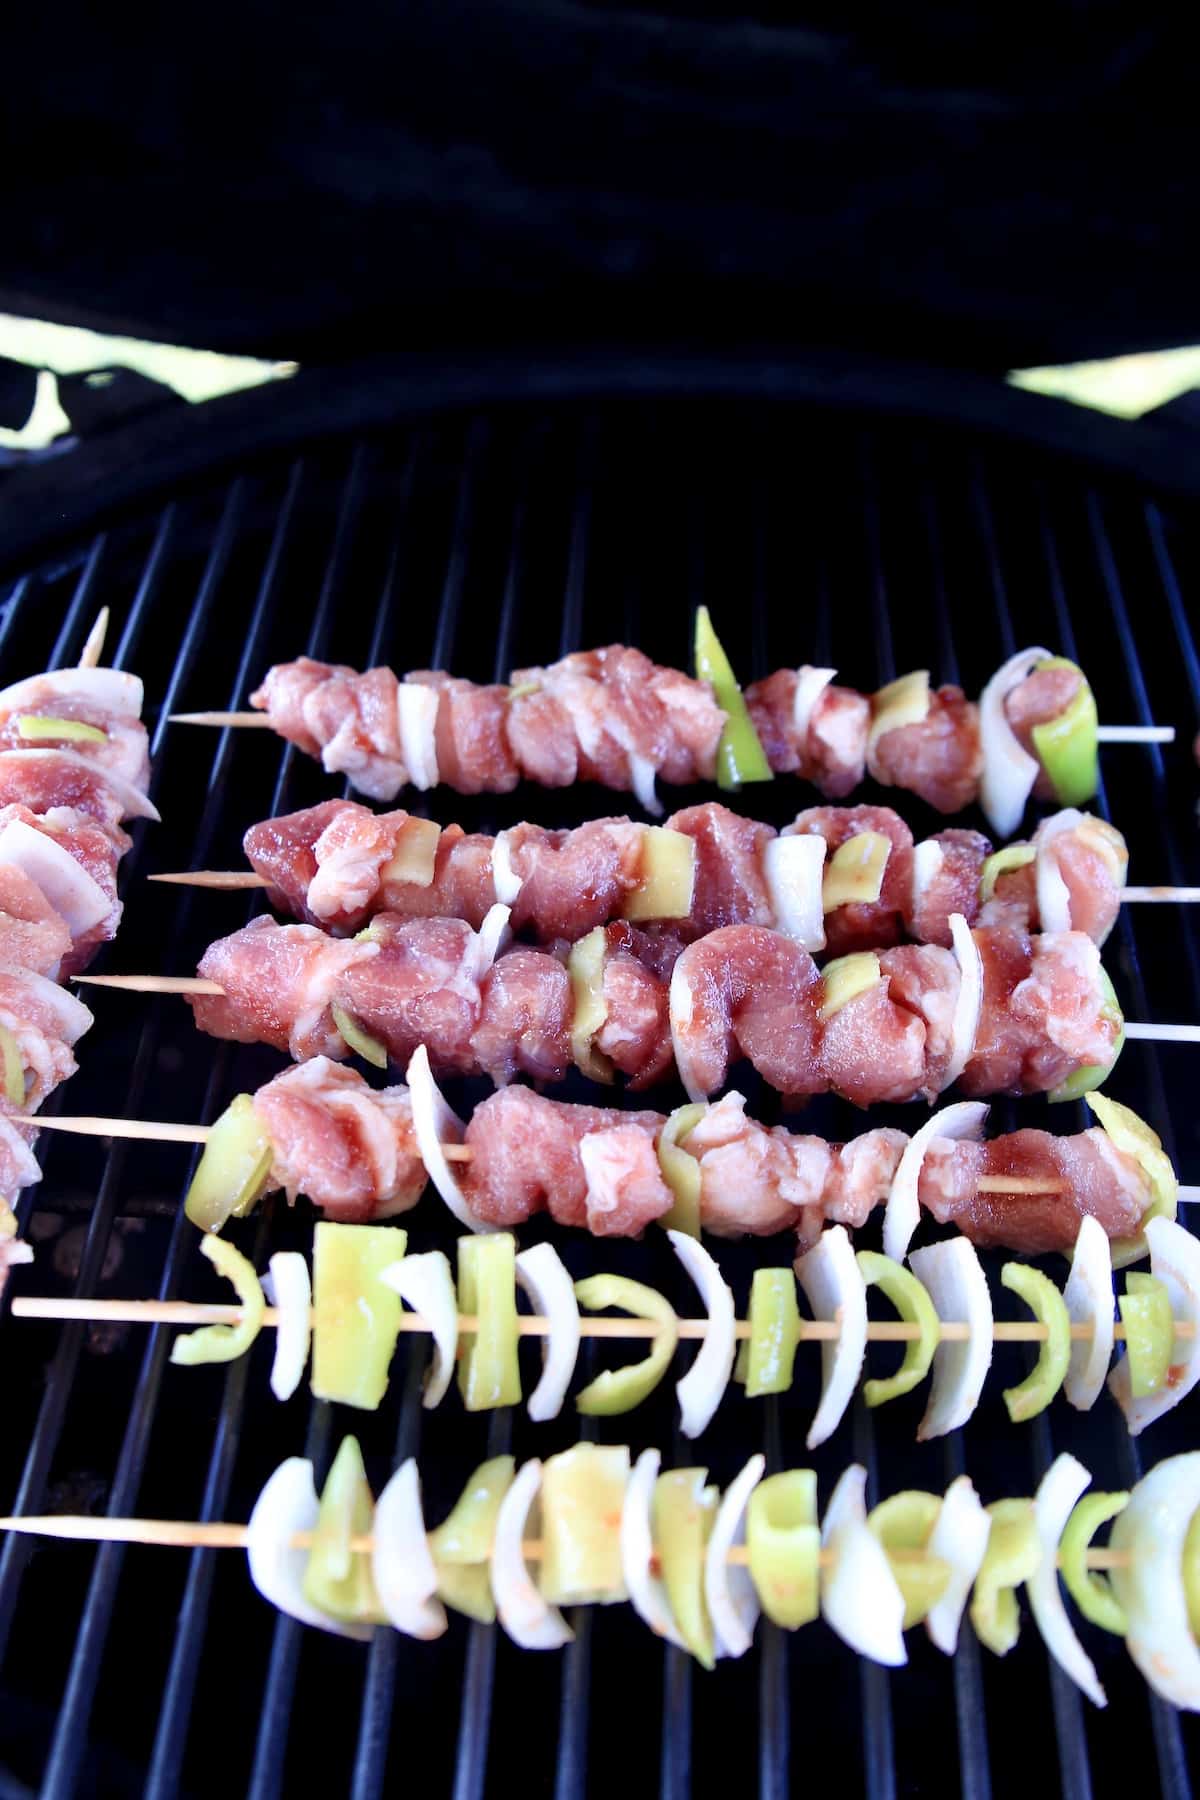 Pork Kabobs on a grill.